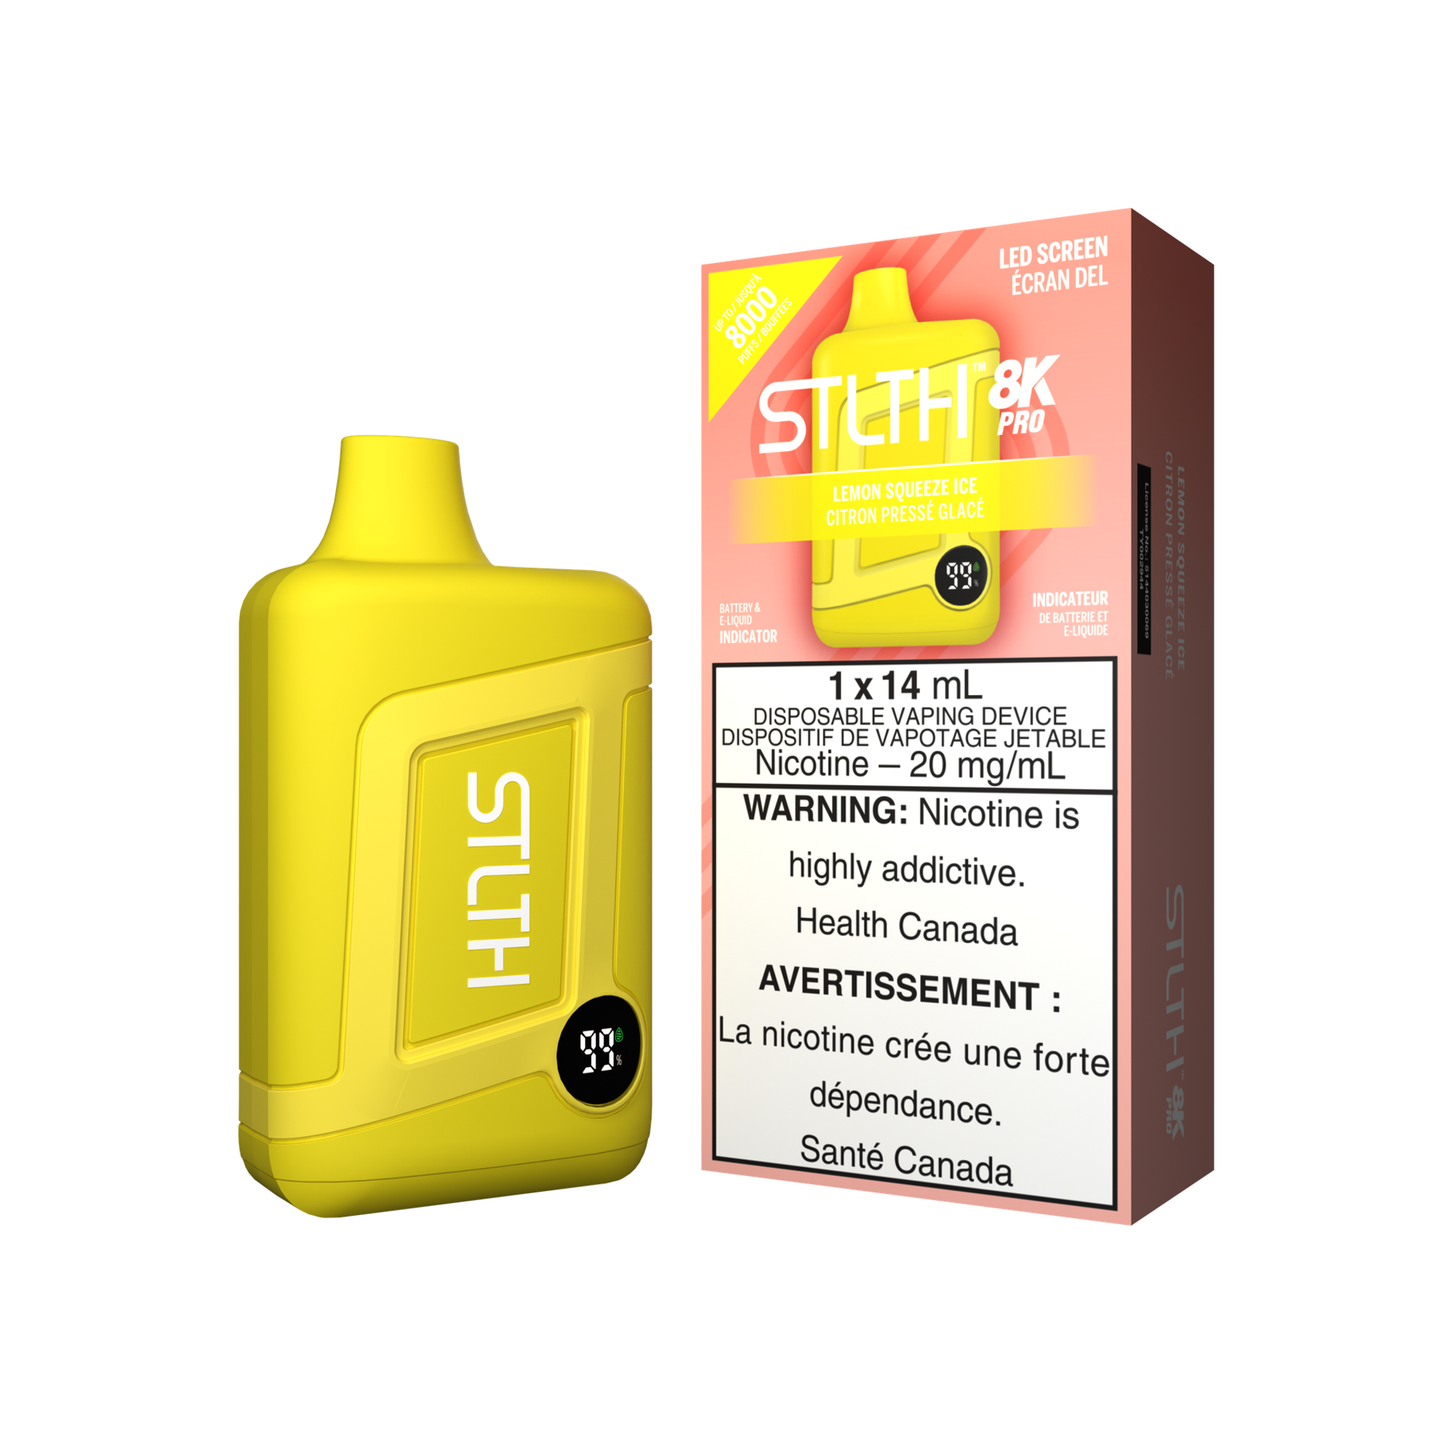 STLTH 8K Pro - Lemon Squeeze Ice